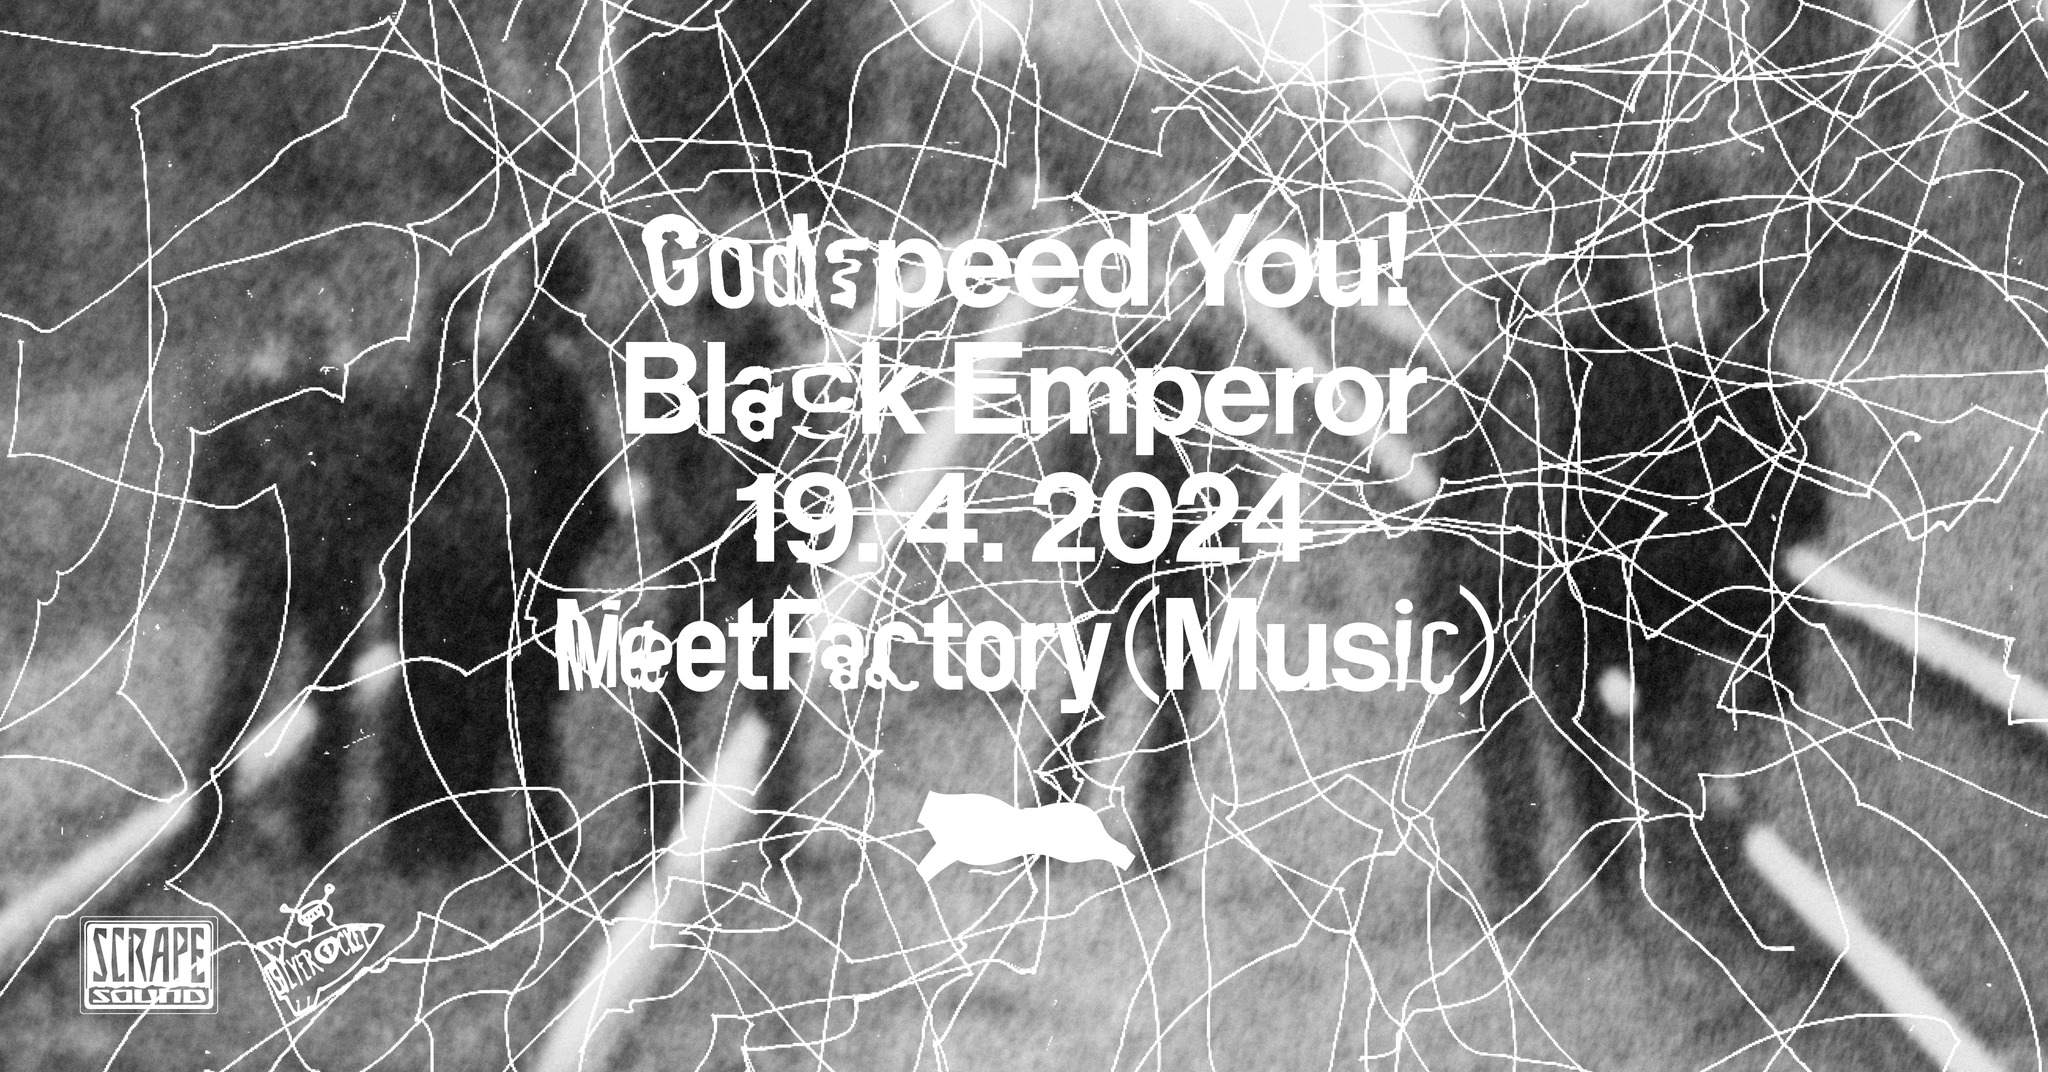 Godspeed you! Black Emperor - フライヤー表